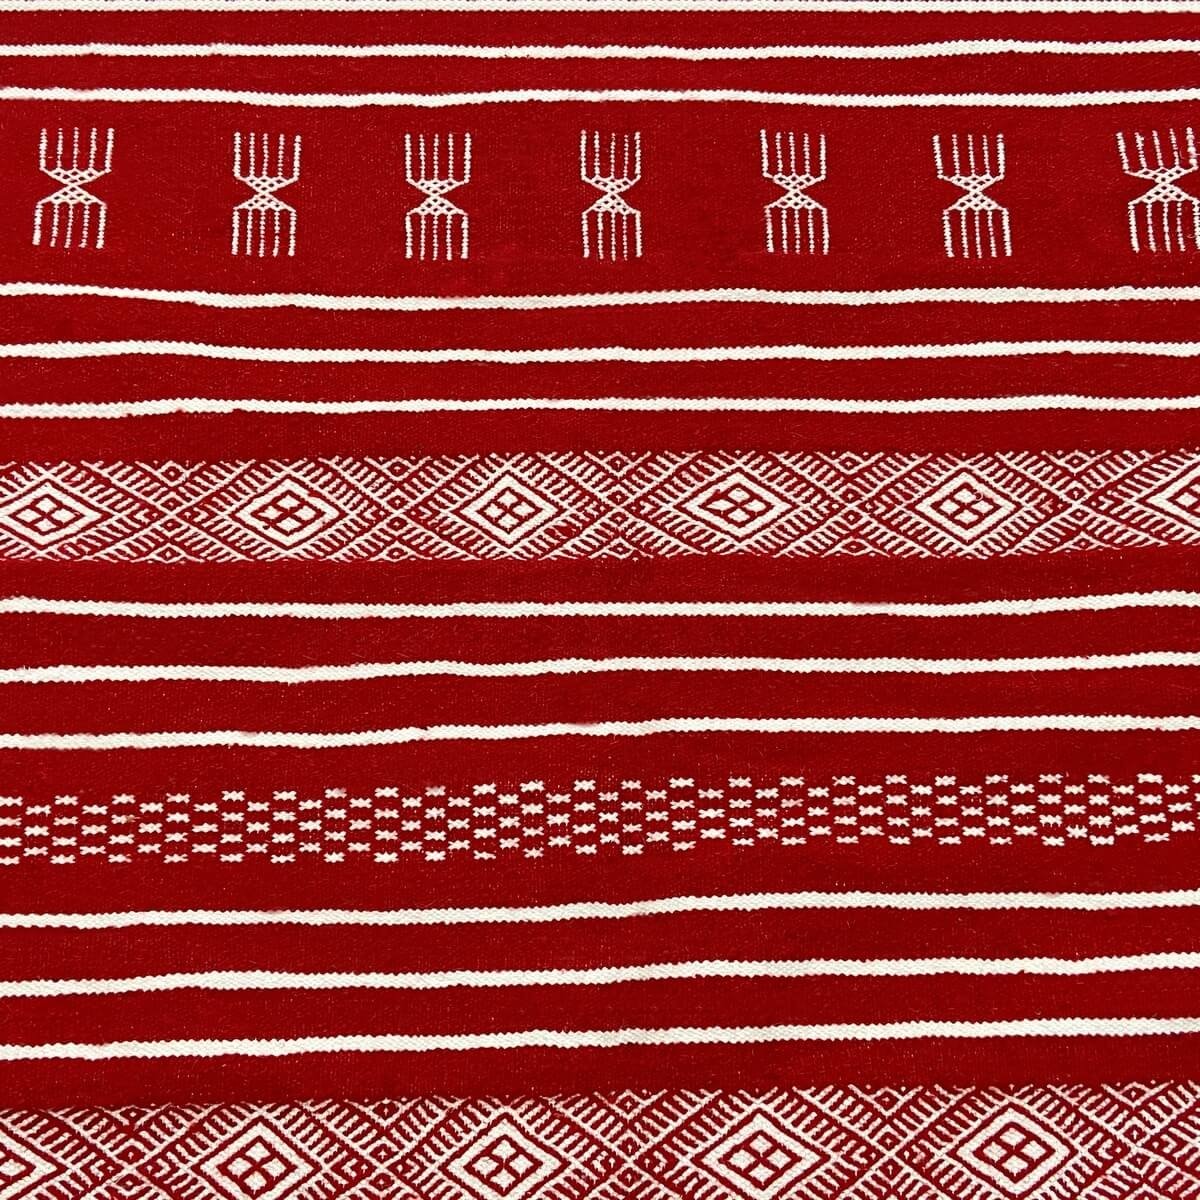 Berber tapijt Tapijt Kilim Kazrach 107x204 Rood (Handgeweven, Wol, Tunesië) Tunesisch kilimdeken, Marokkaanse stijl. Rechthoekig